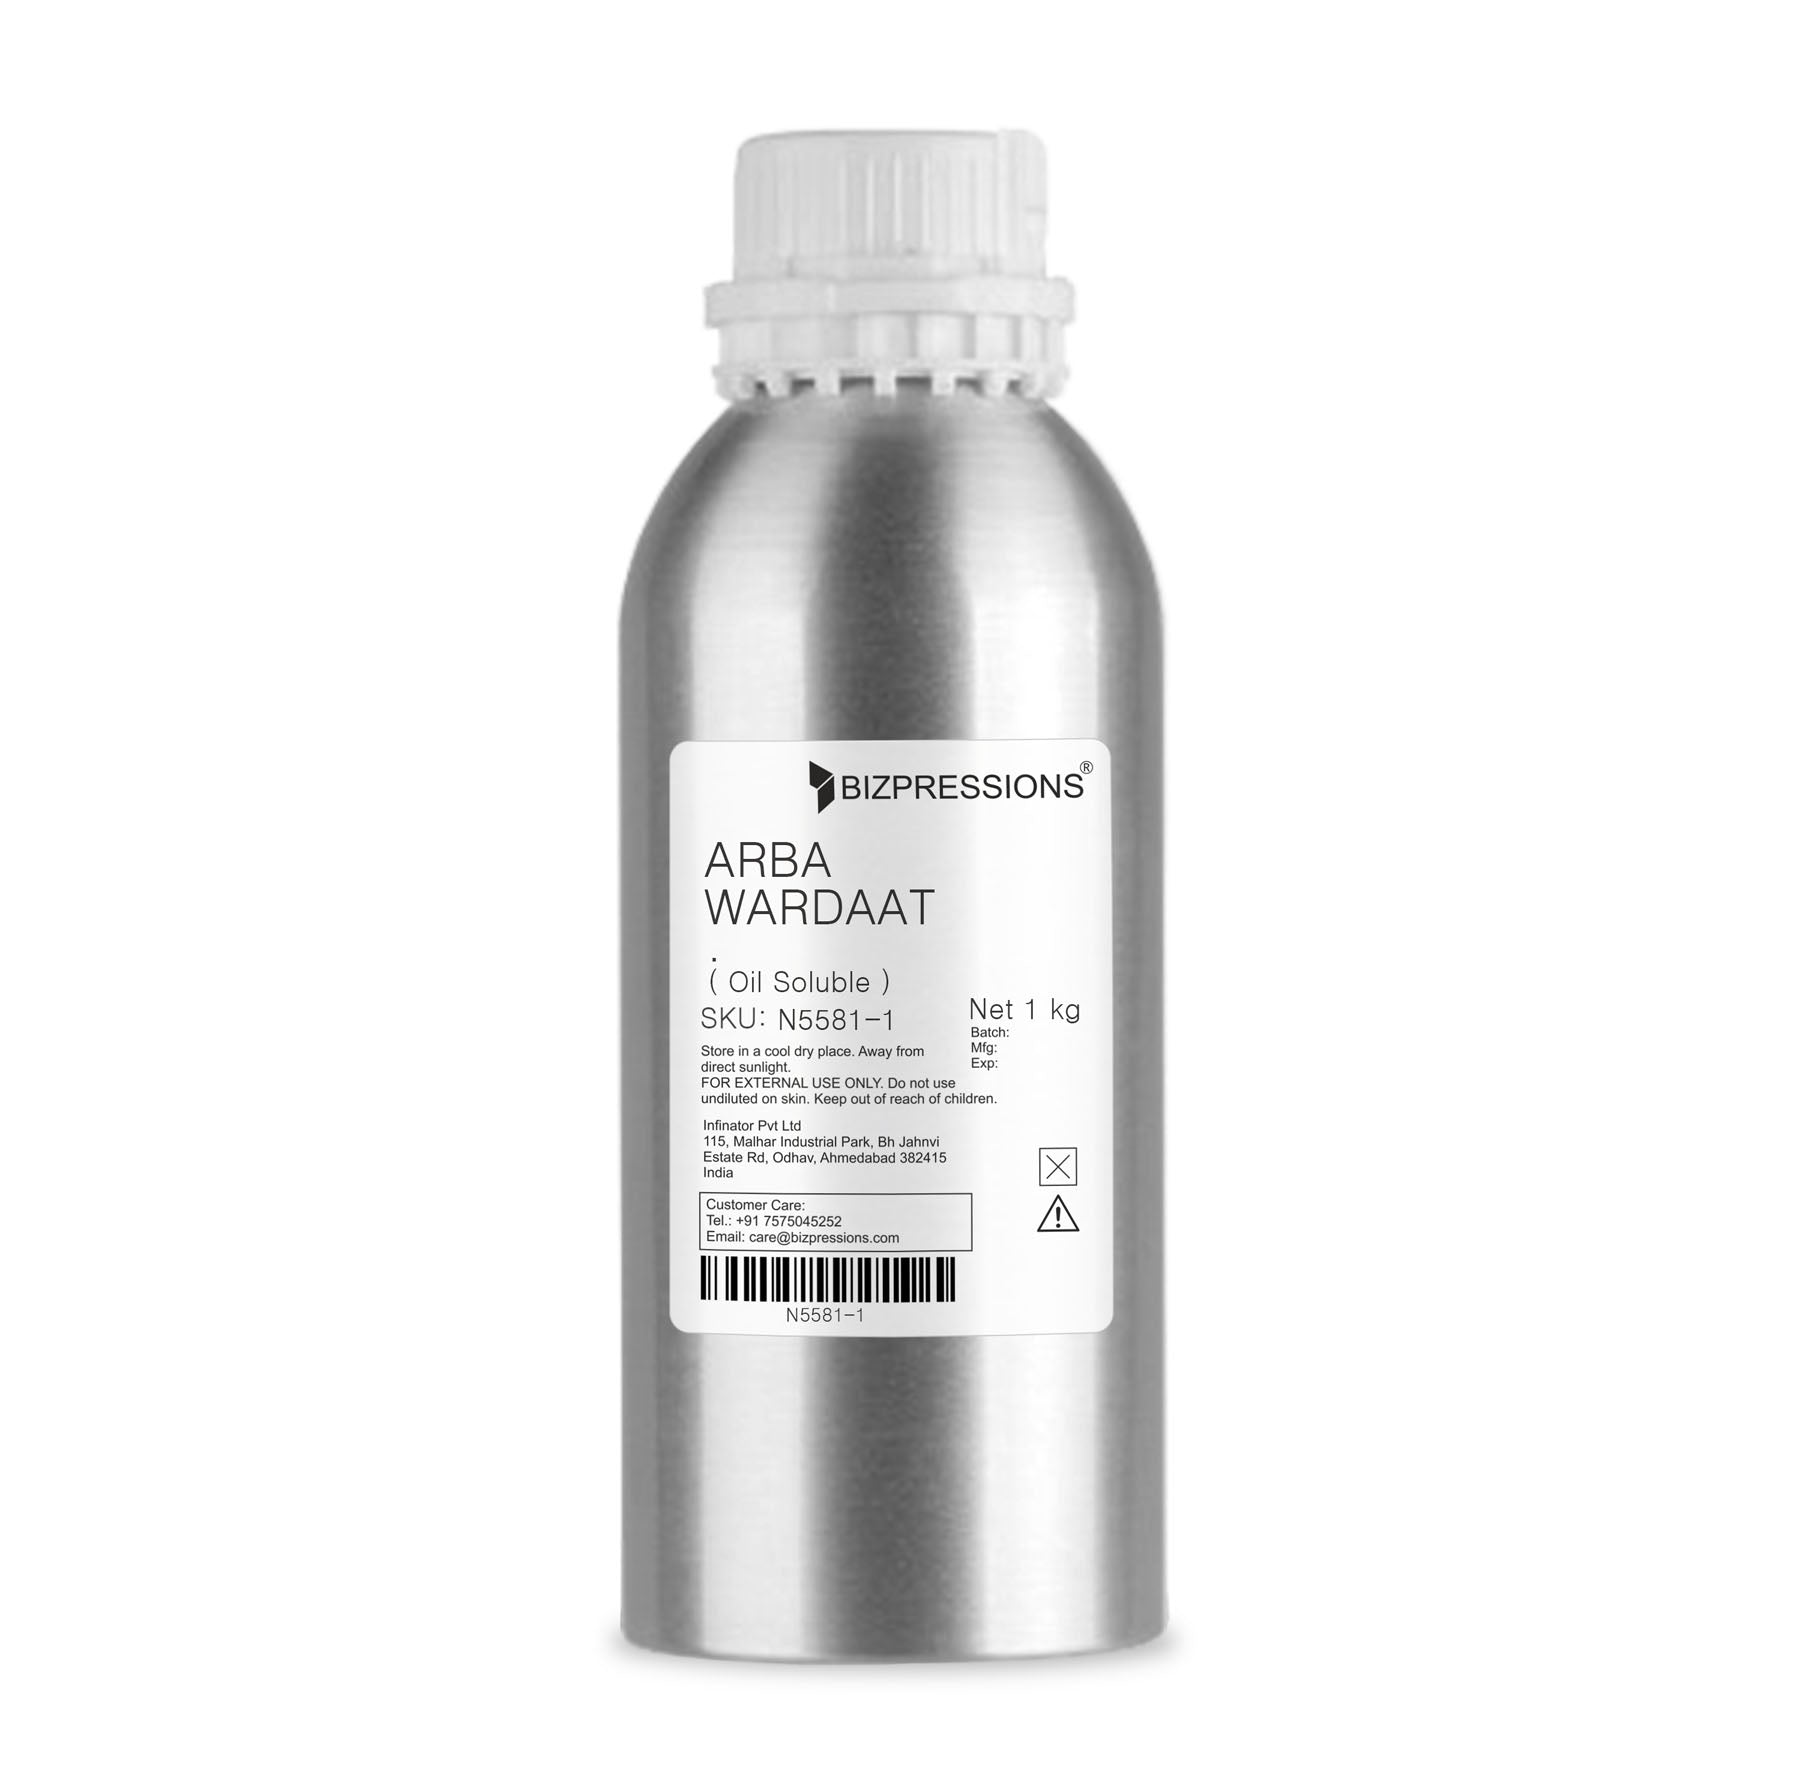 ARBA WARDAAT - Fragrance ( Oil Soluble )